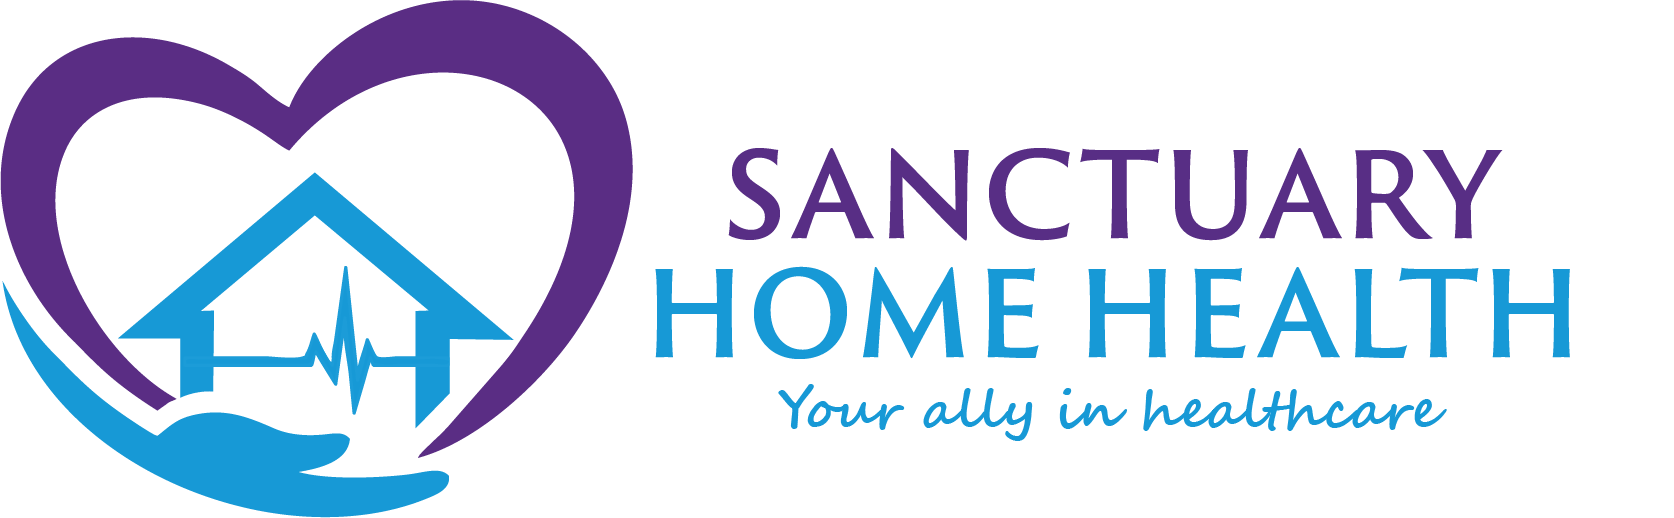 Sanctuary Home Health 